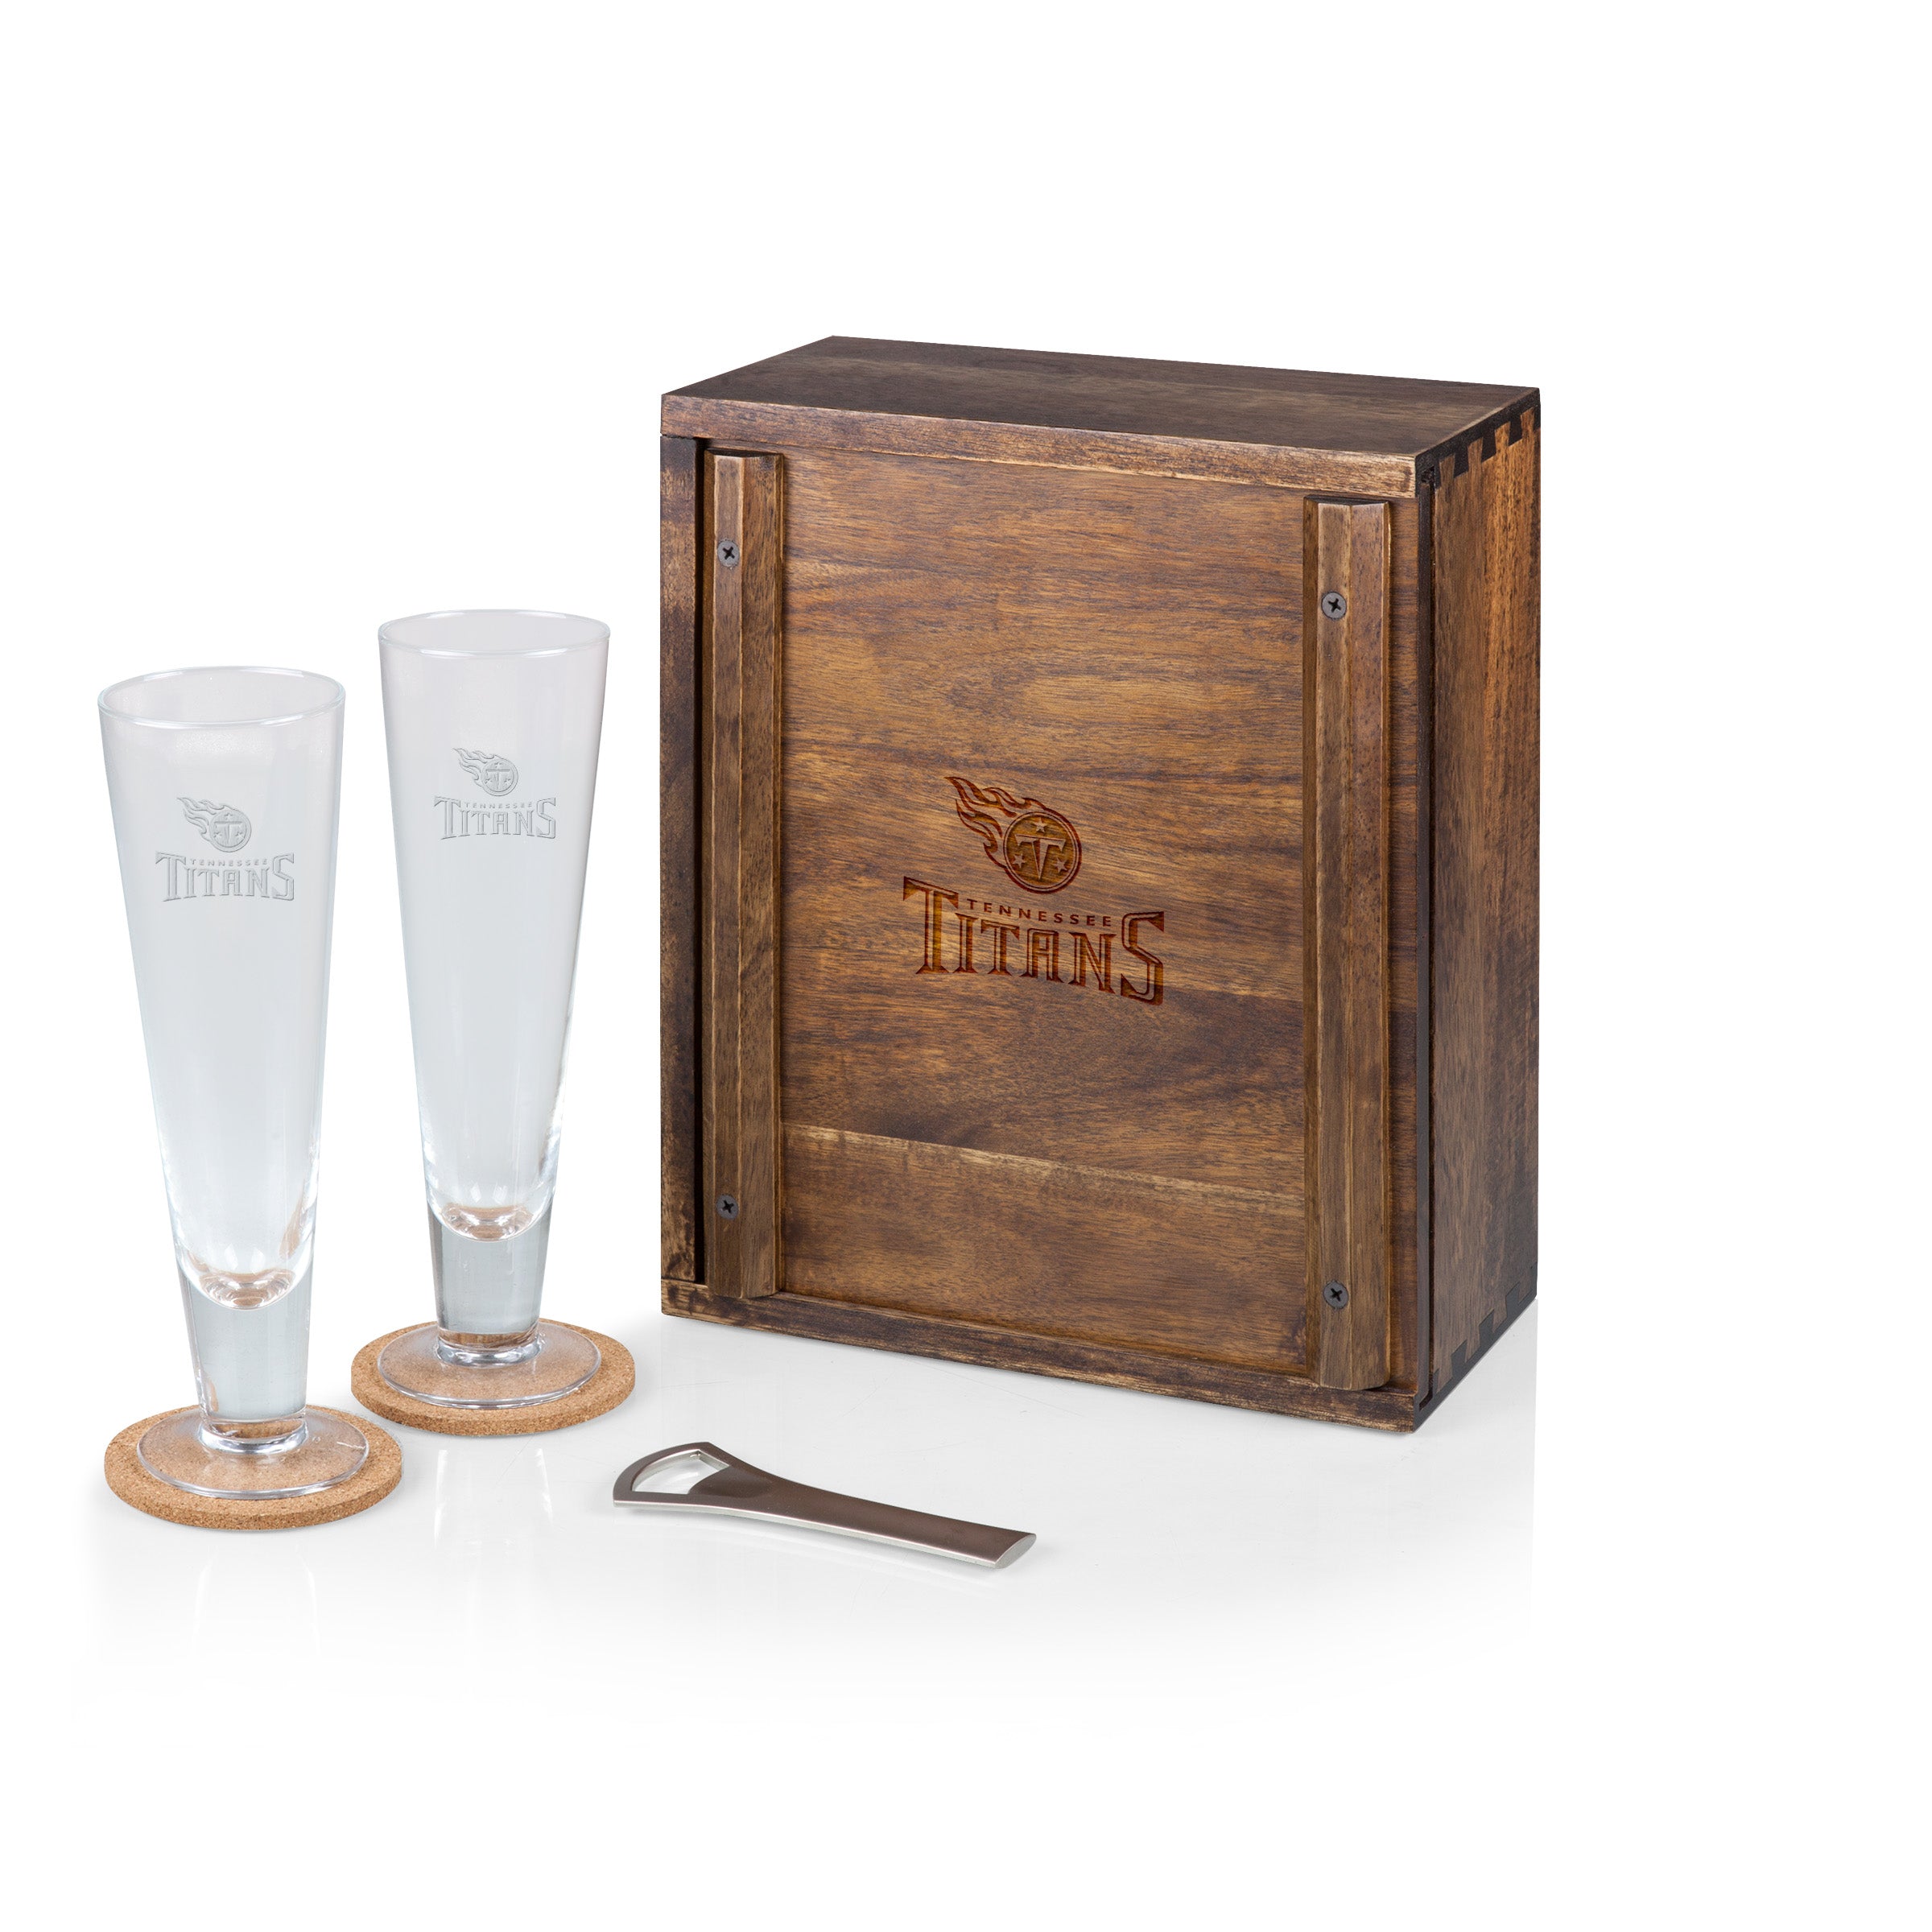 Tennessee Titans - Pilsner Beer Glass Gift Set